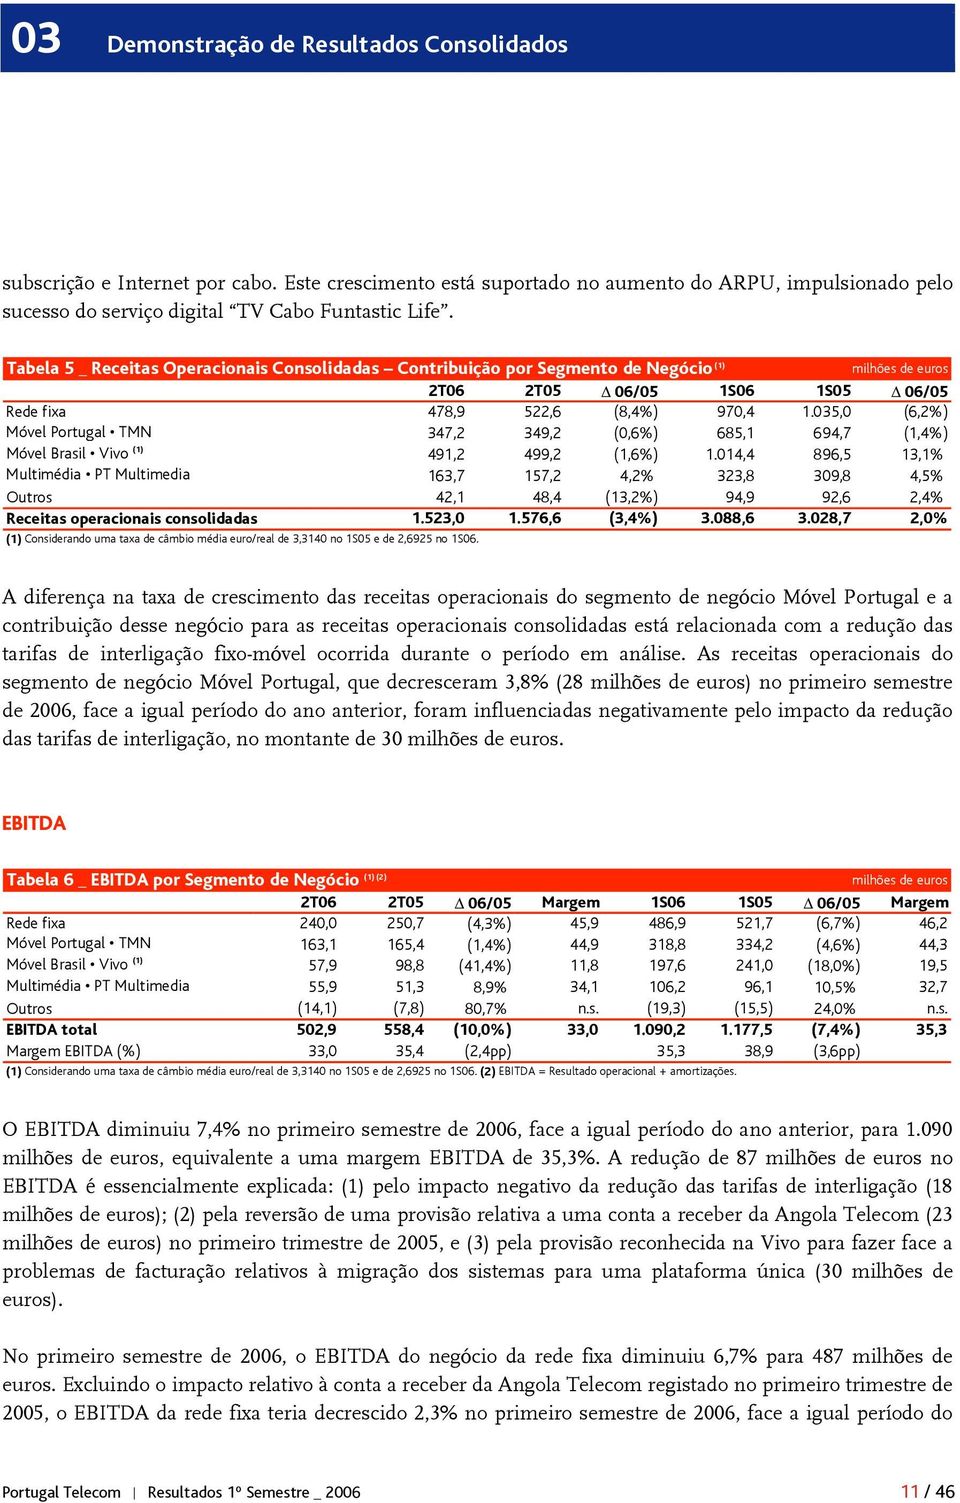 035,0 (6,2%) Móvel Portugal TMN 347,2 349,2 (0,6%) 685,1 694,7 (1,4%) Móvel Brasil Vivo (1) 491,2 499,2 (1,6%) 1.